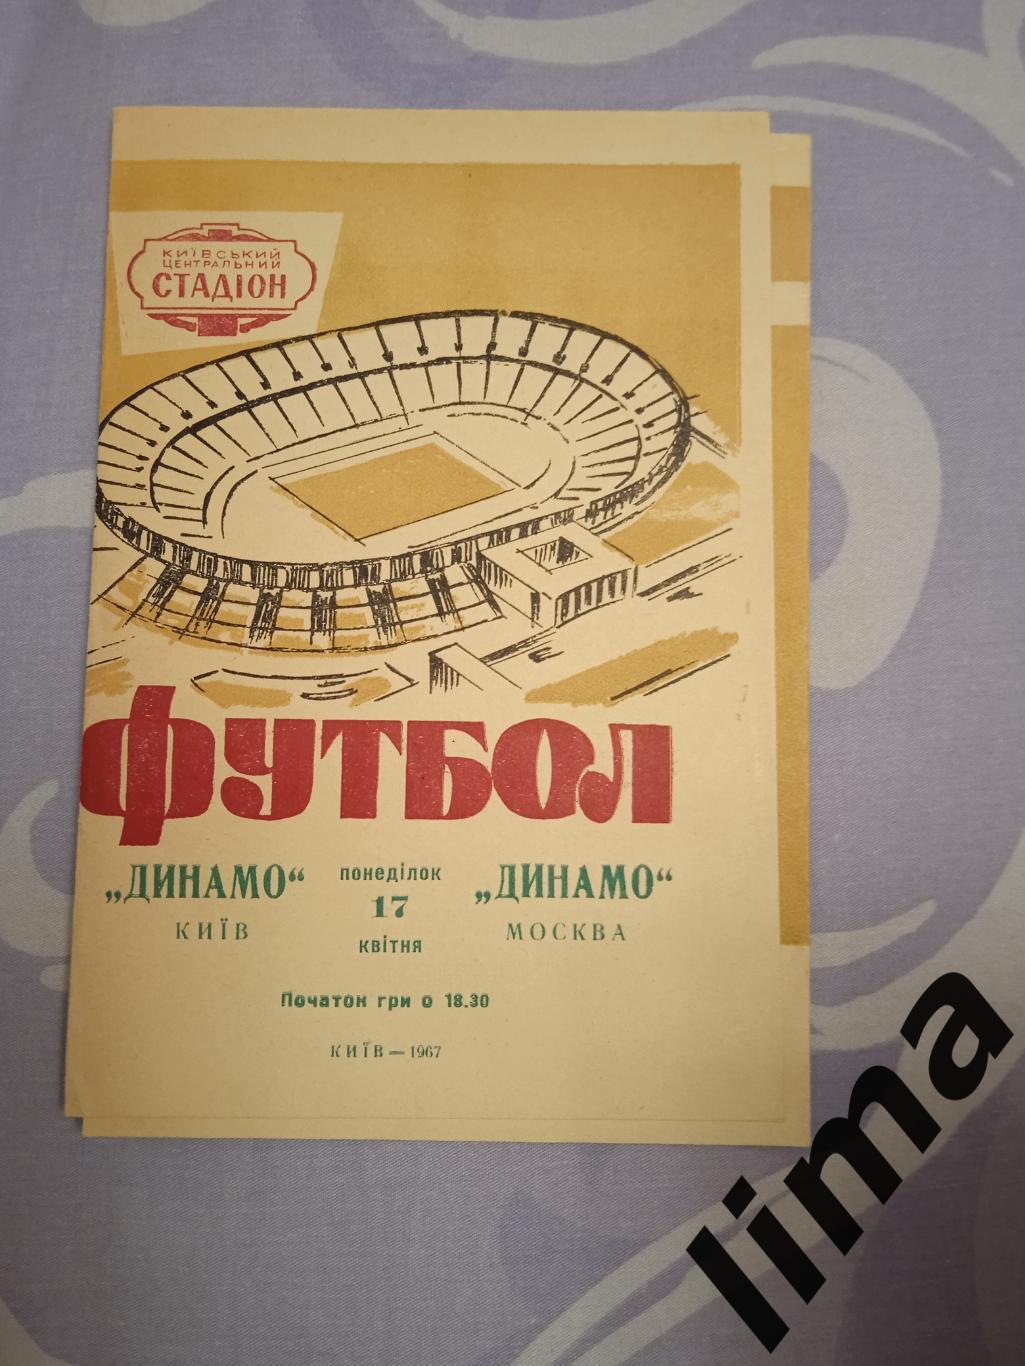 Динамо Киев - Динамо Москва 1967+ билет